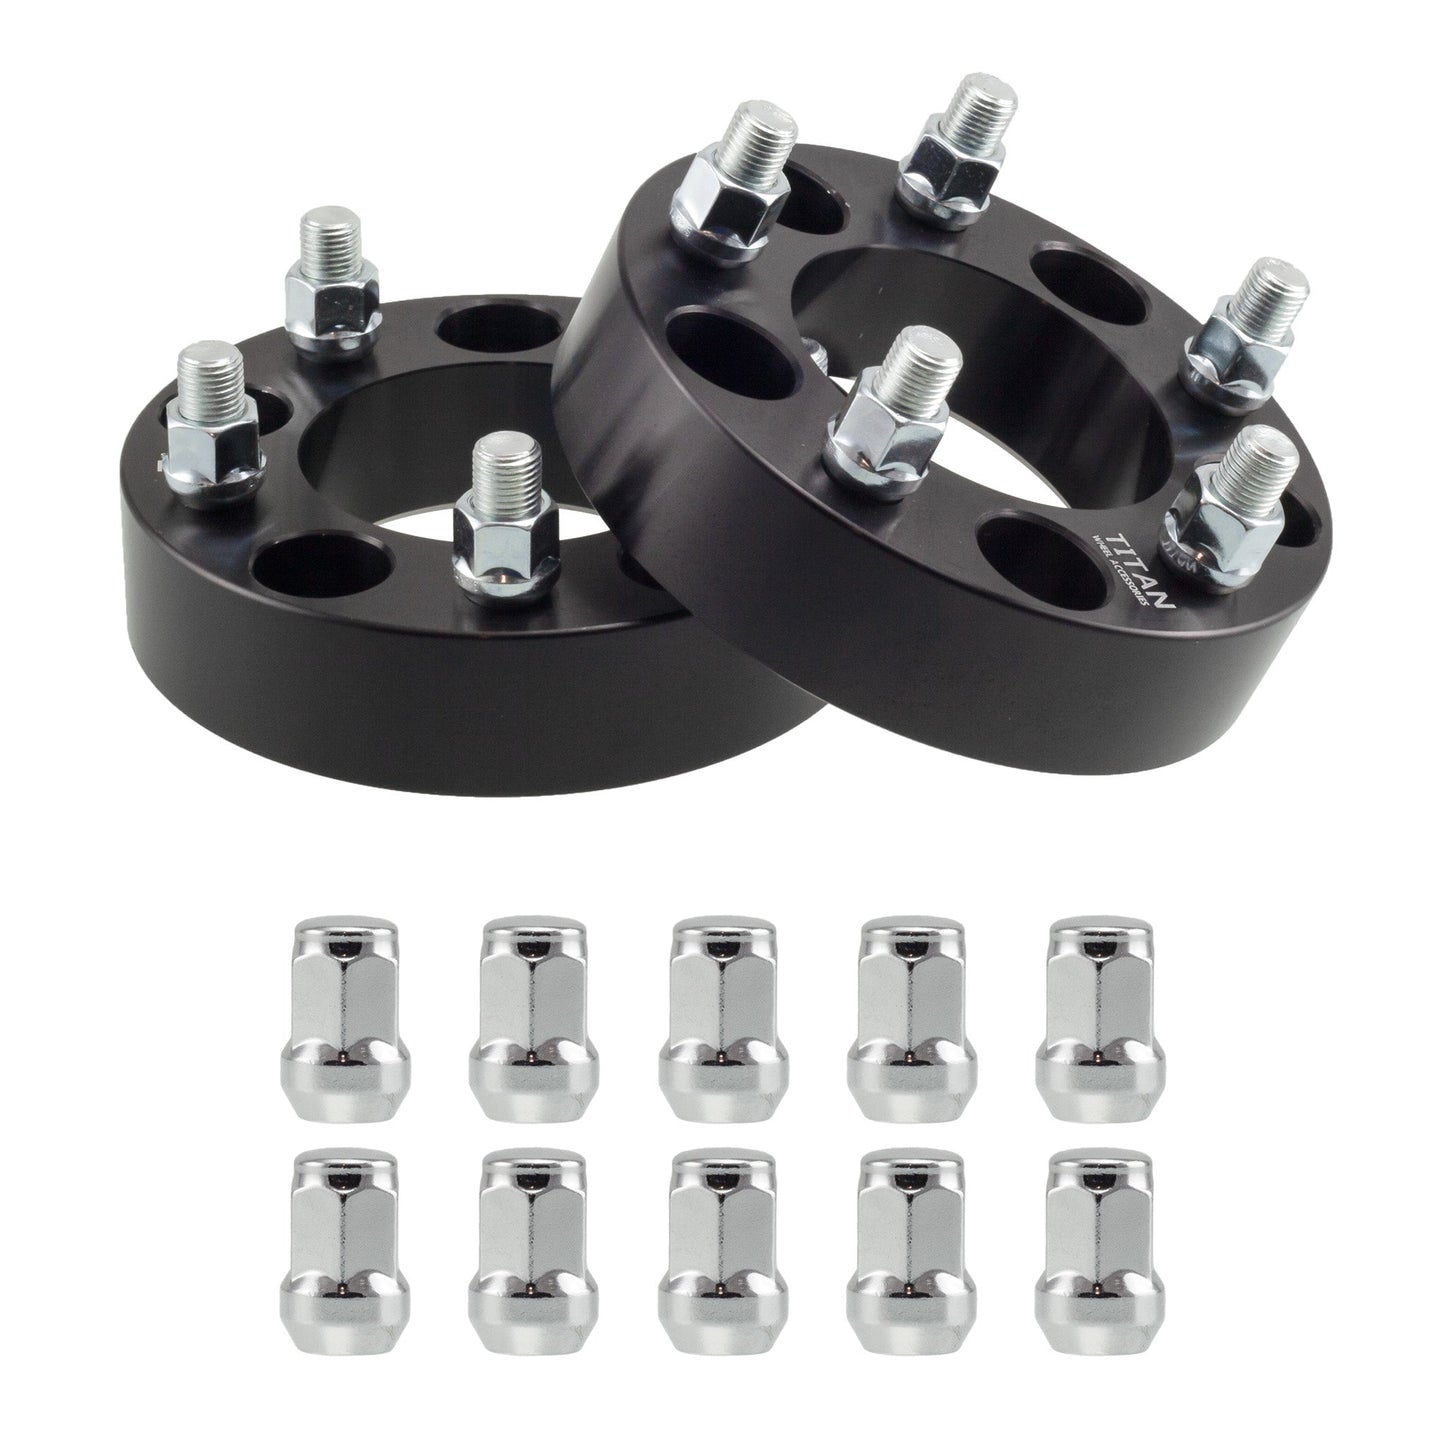 25mm (1") Titan Wheel Spacers for Scion Toyota Lexus | 5x114.3 | 12x1.5 Studs | Titan Wheel Accessories